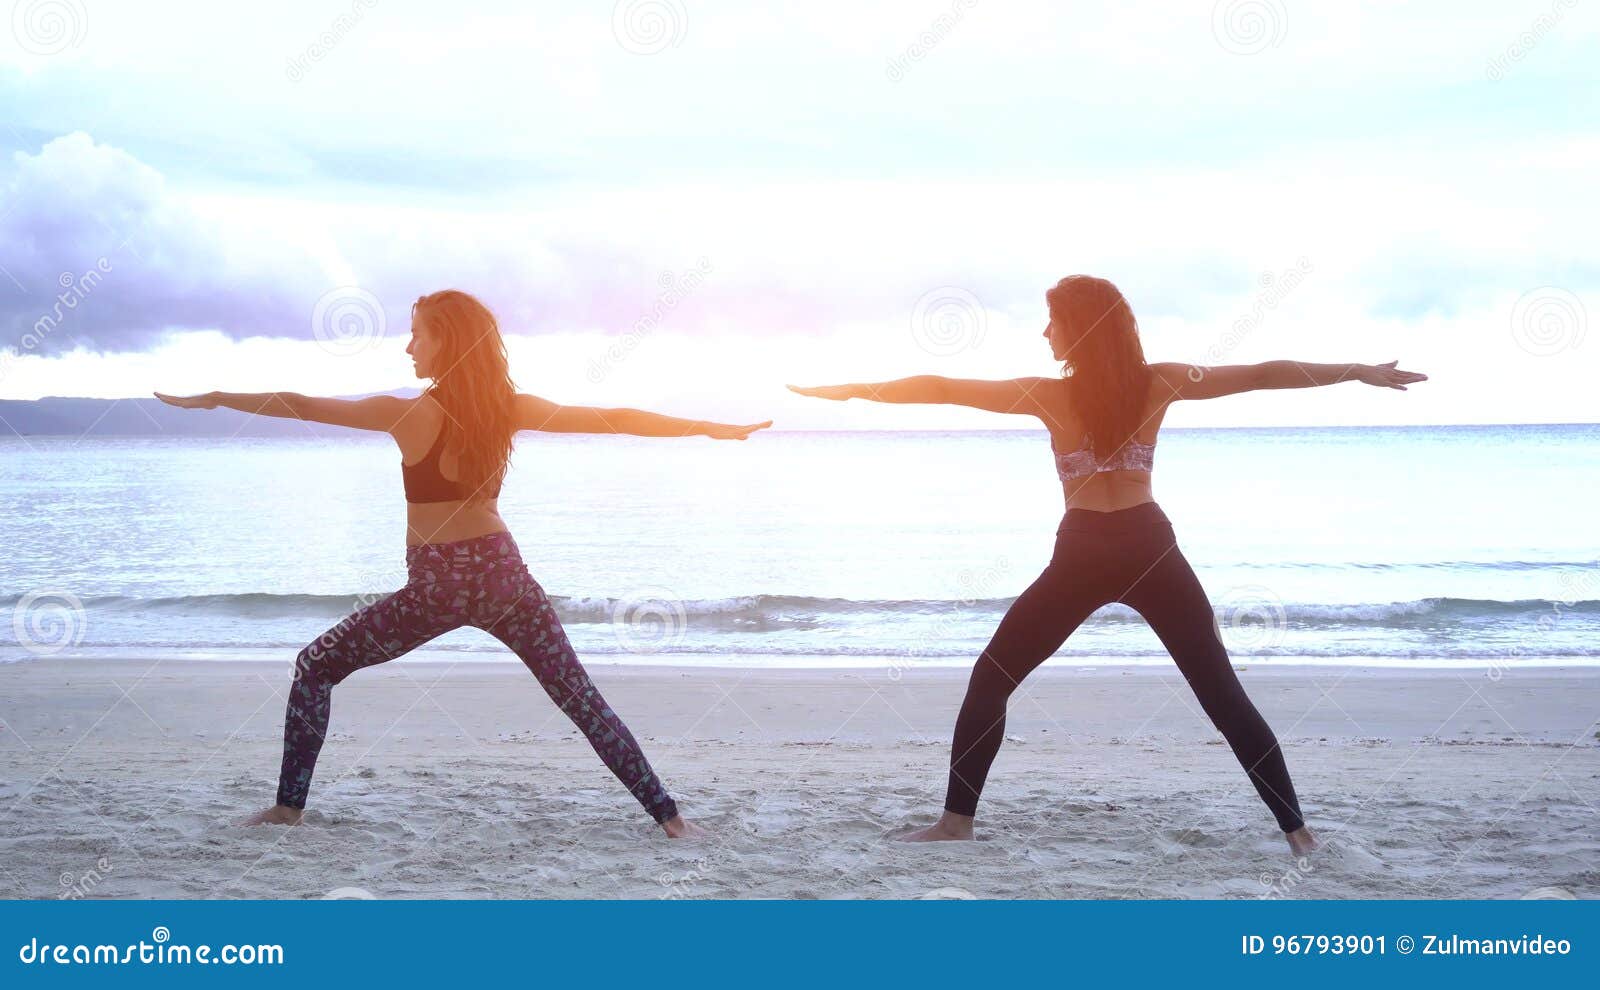 https://thumbs.dreamstime.com/z/young-women-doing-yoga-beach-wearing-sports-wear-stretching-her-body-96793901.jpg